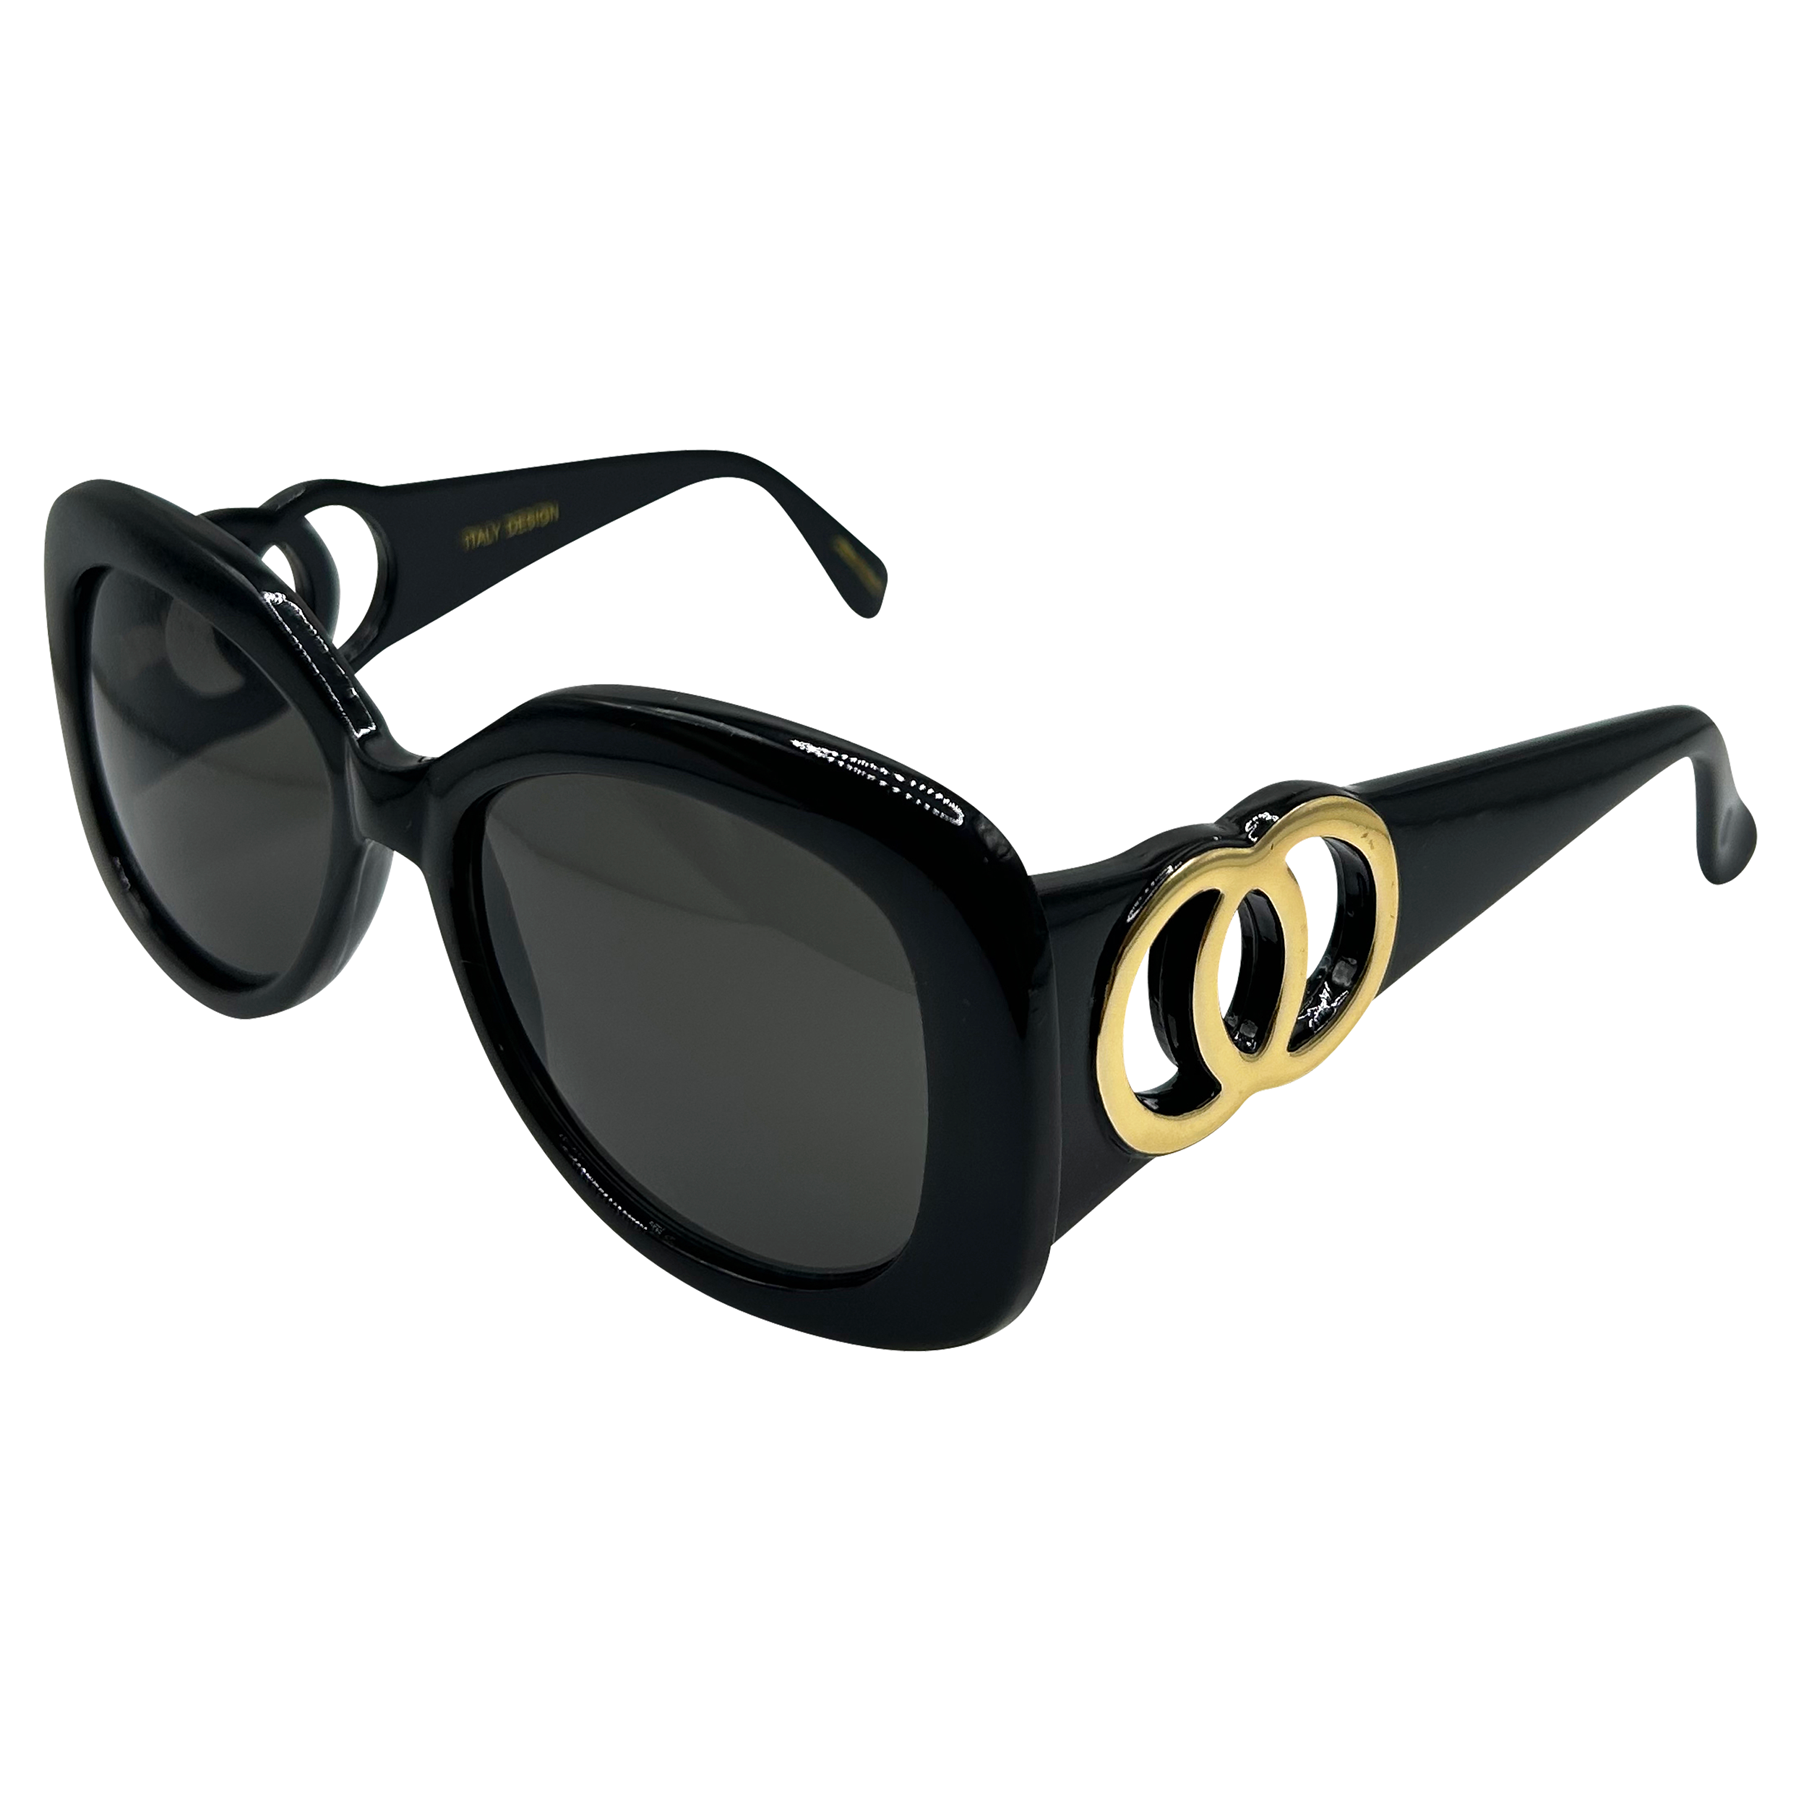 BESITOS Black/Super Dark Mod 90s Sunglasses